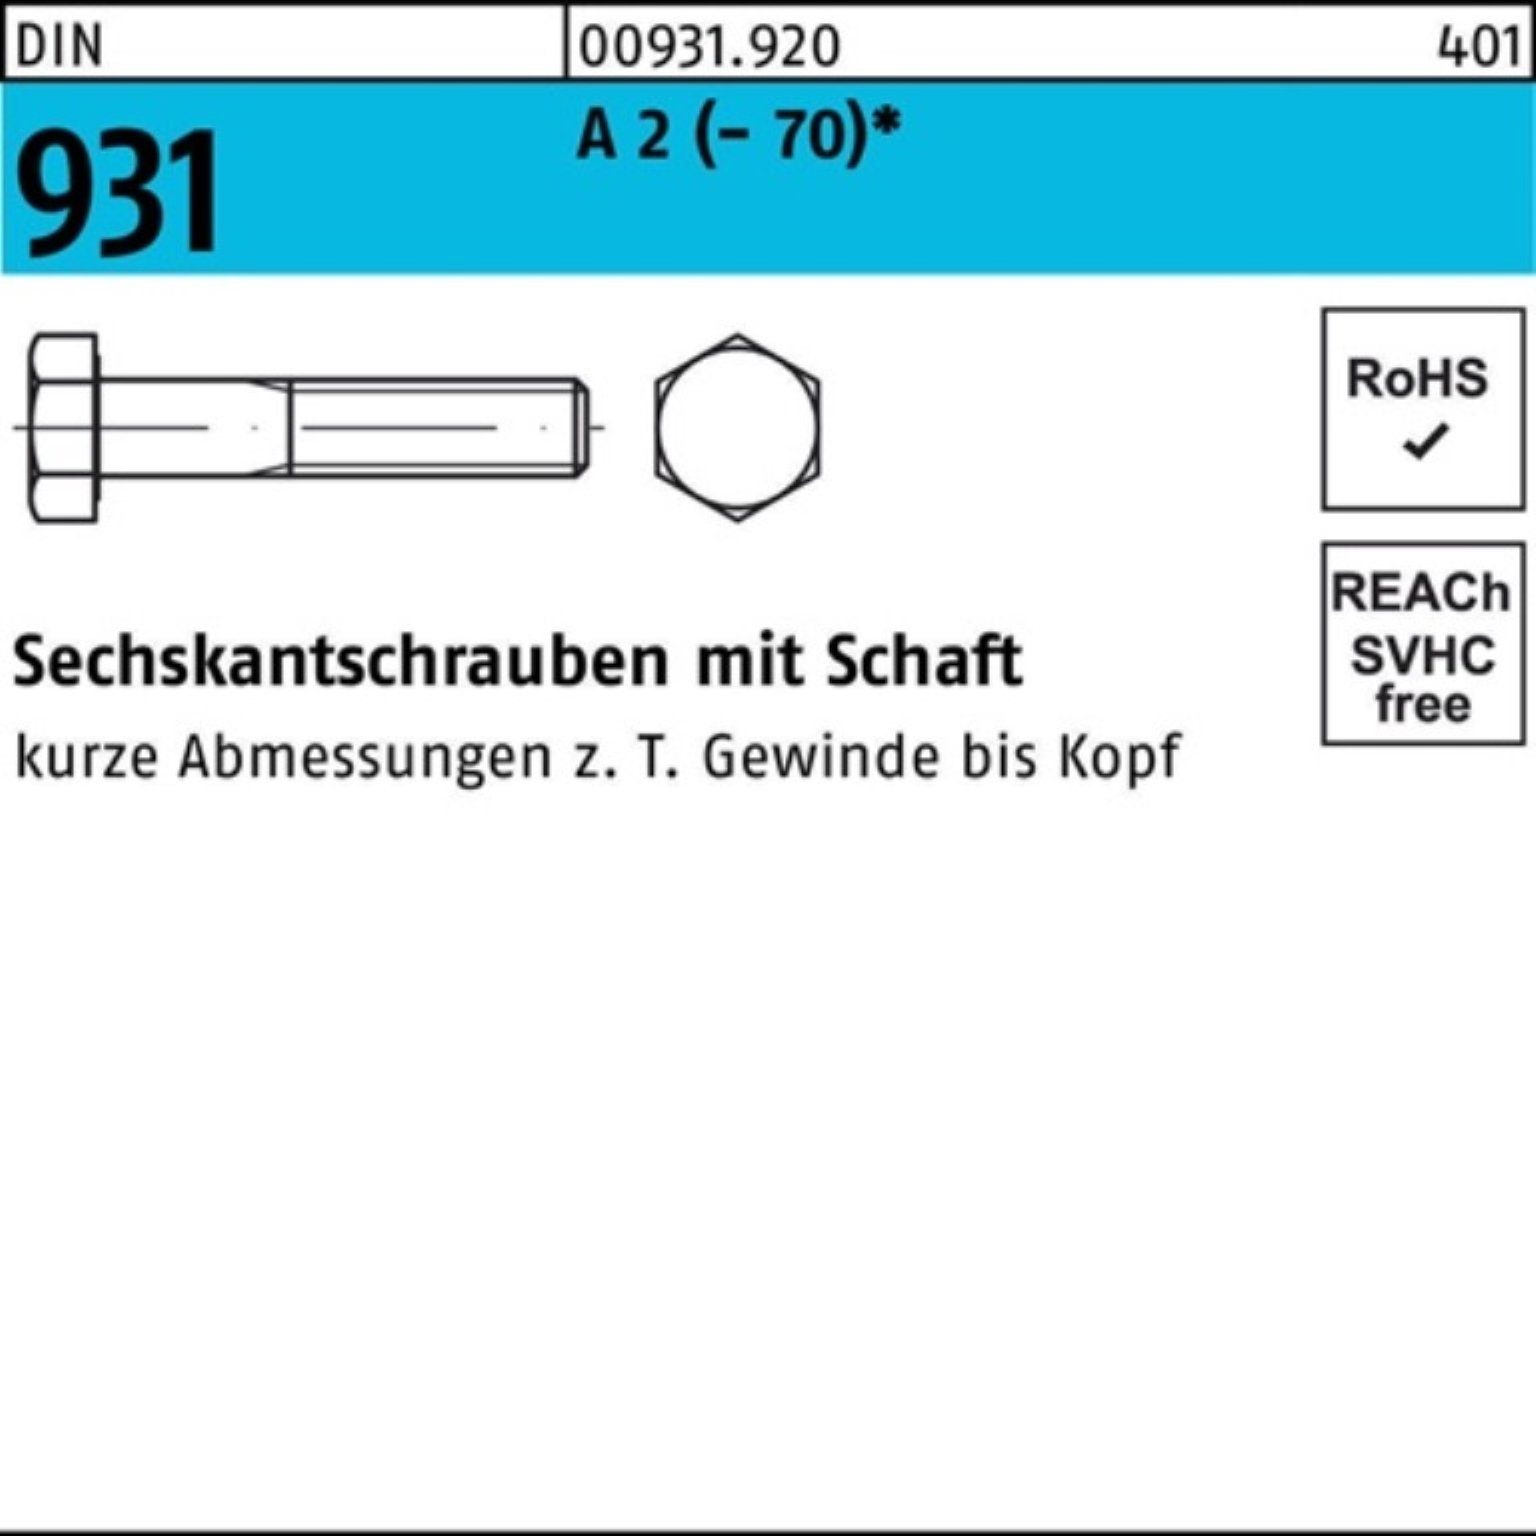 Reyher Sechskantschraube 100er Pack Sechskantschraube DIN 931 Schaft M8x 90 A 2 (70) 100 Stü | Schrauben